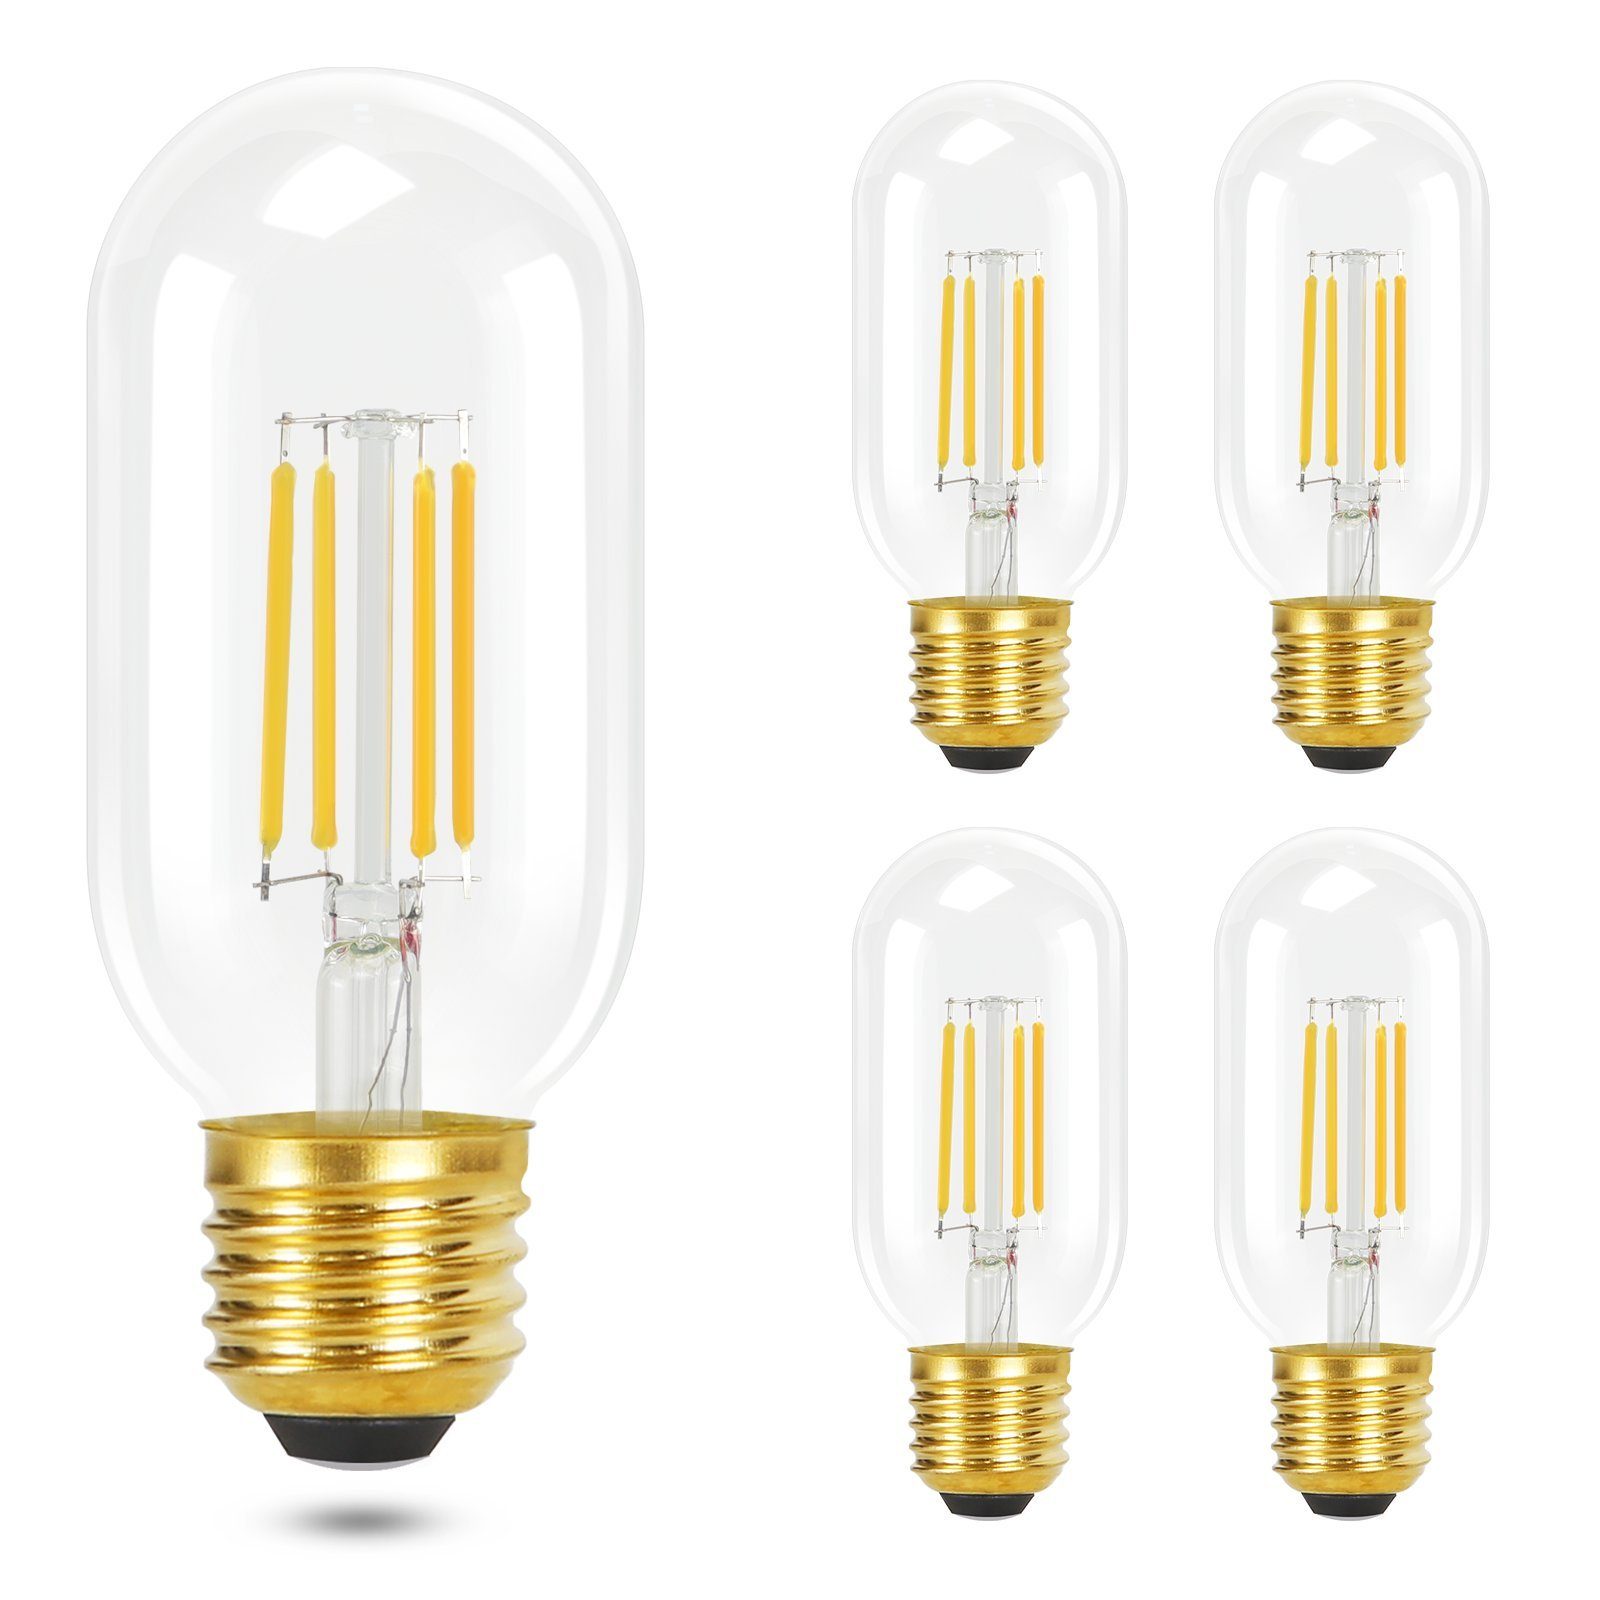 ZMH LED-Leuchtmittel LED Glühbirnen Vintage Lampe 4W Energiesparlampe Flur, 4 St., 2700k, Nicht Dimmbar Transparent